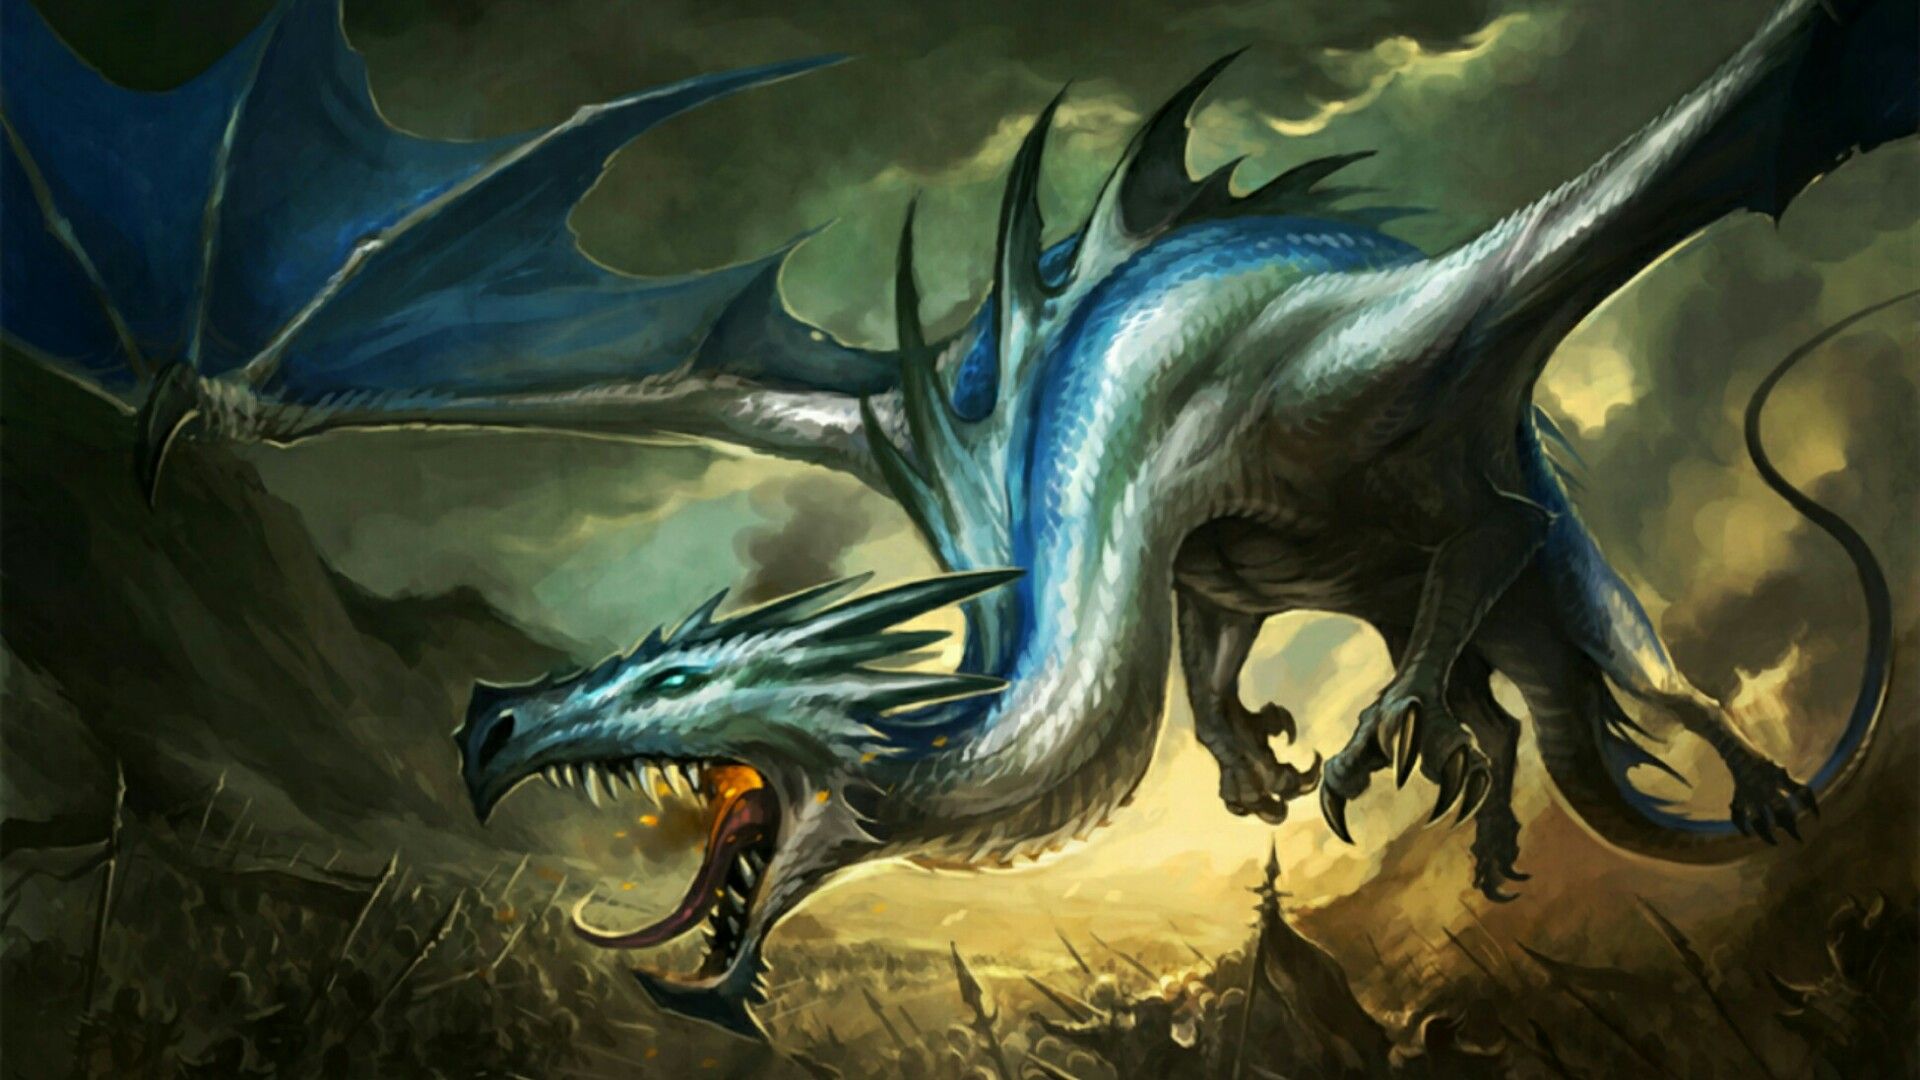 Fantasy Hd Cool Dragon Art
 Wallpapers